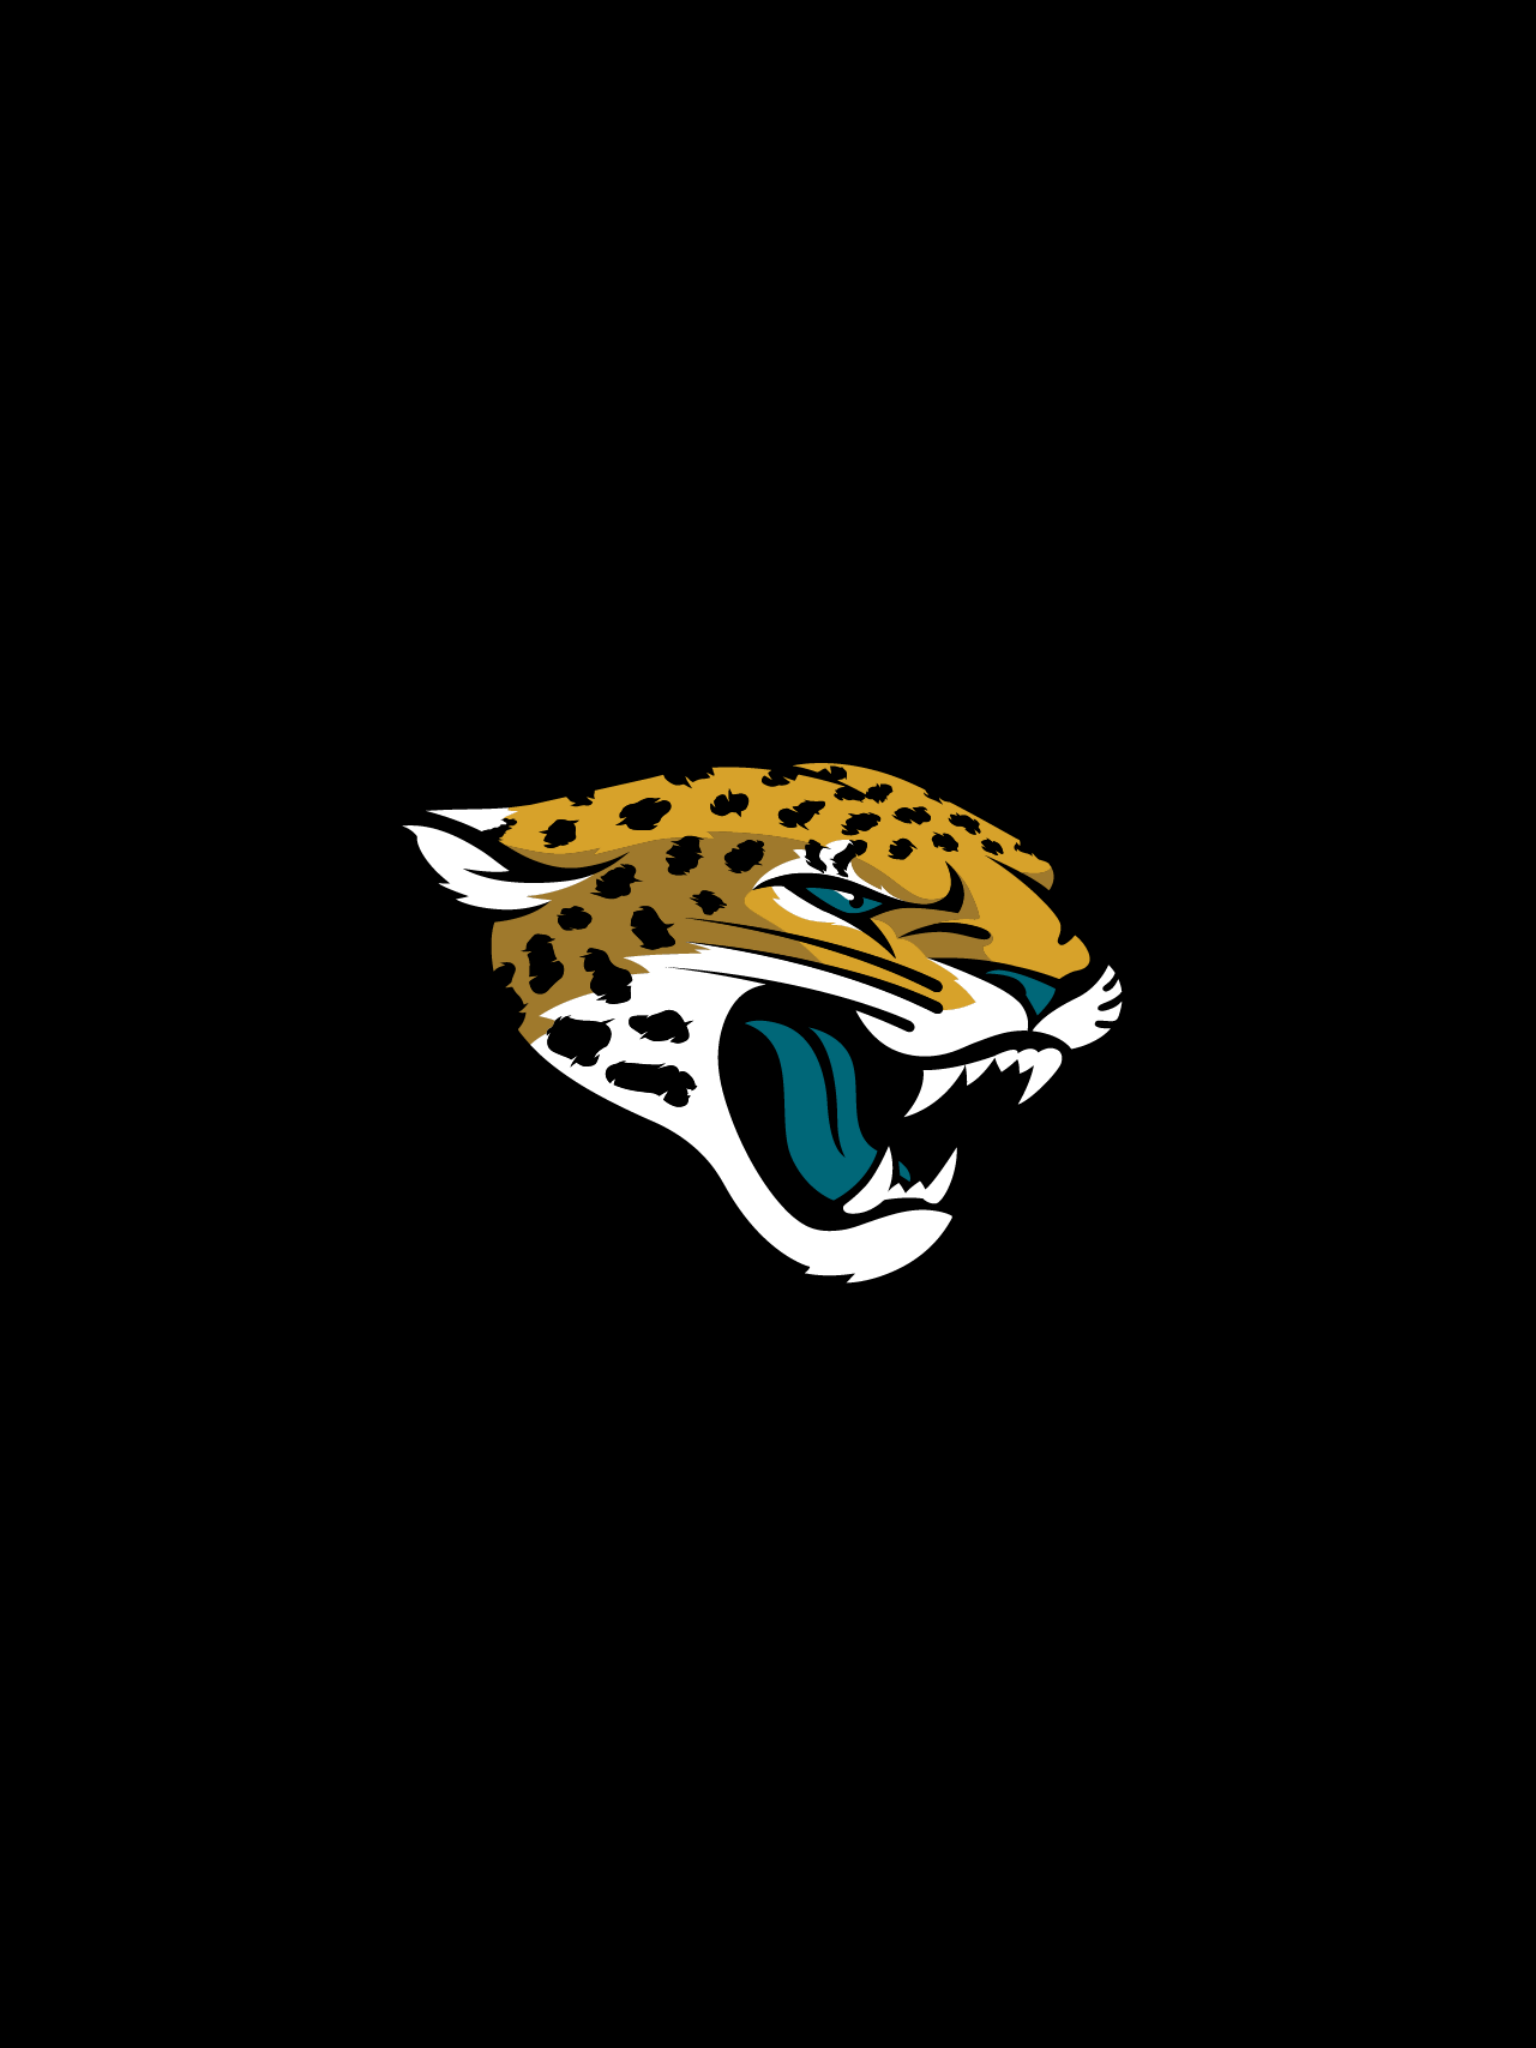 Jacksonville Jaguars 25th Anniversary Logo - HD Wallpaper 